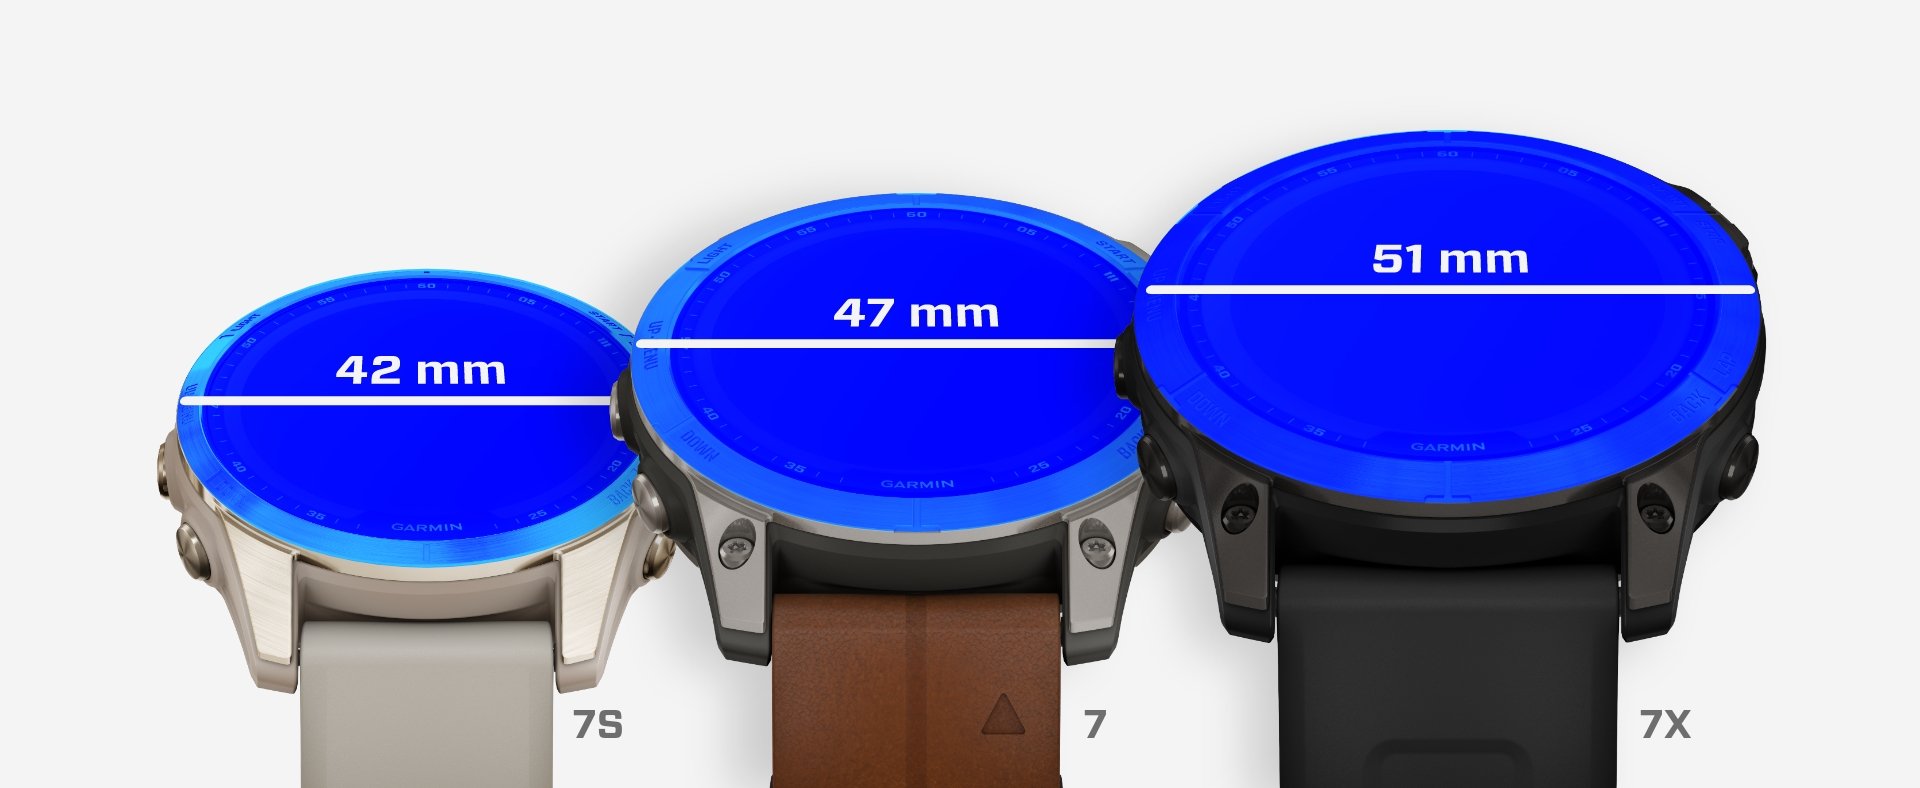 Garmin Fenix 7S Solar smartwatch hits cheapest ever price ahead of Black  Friday